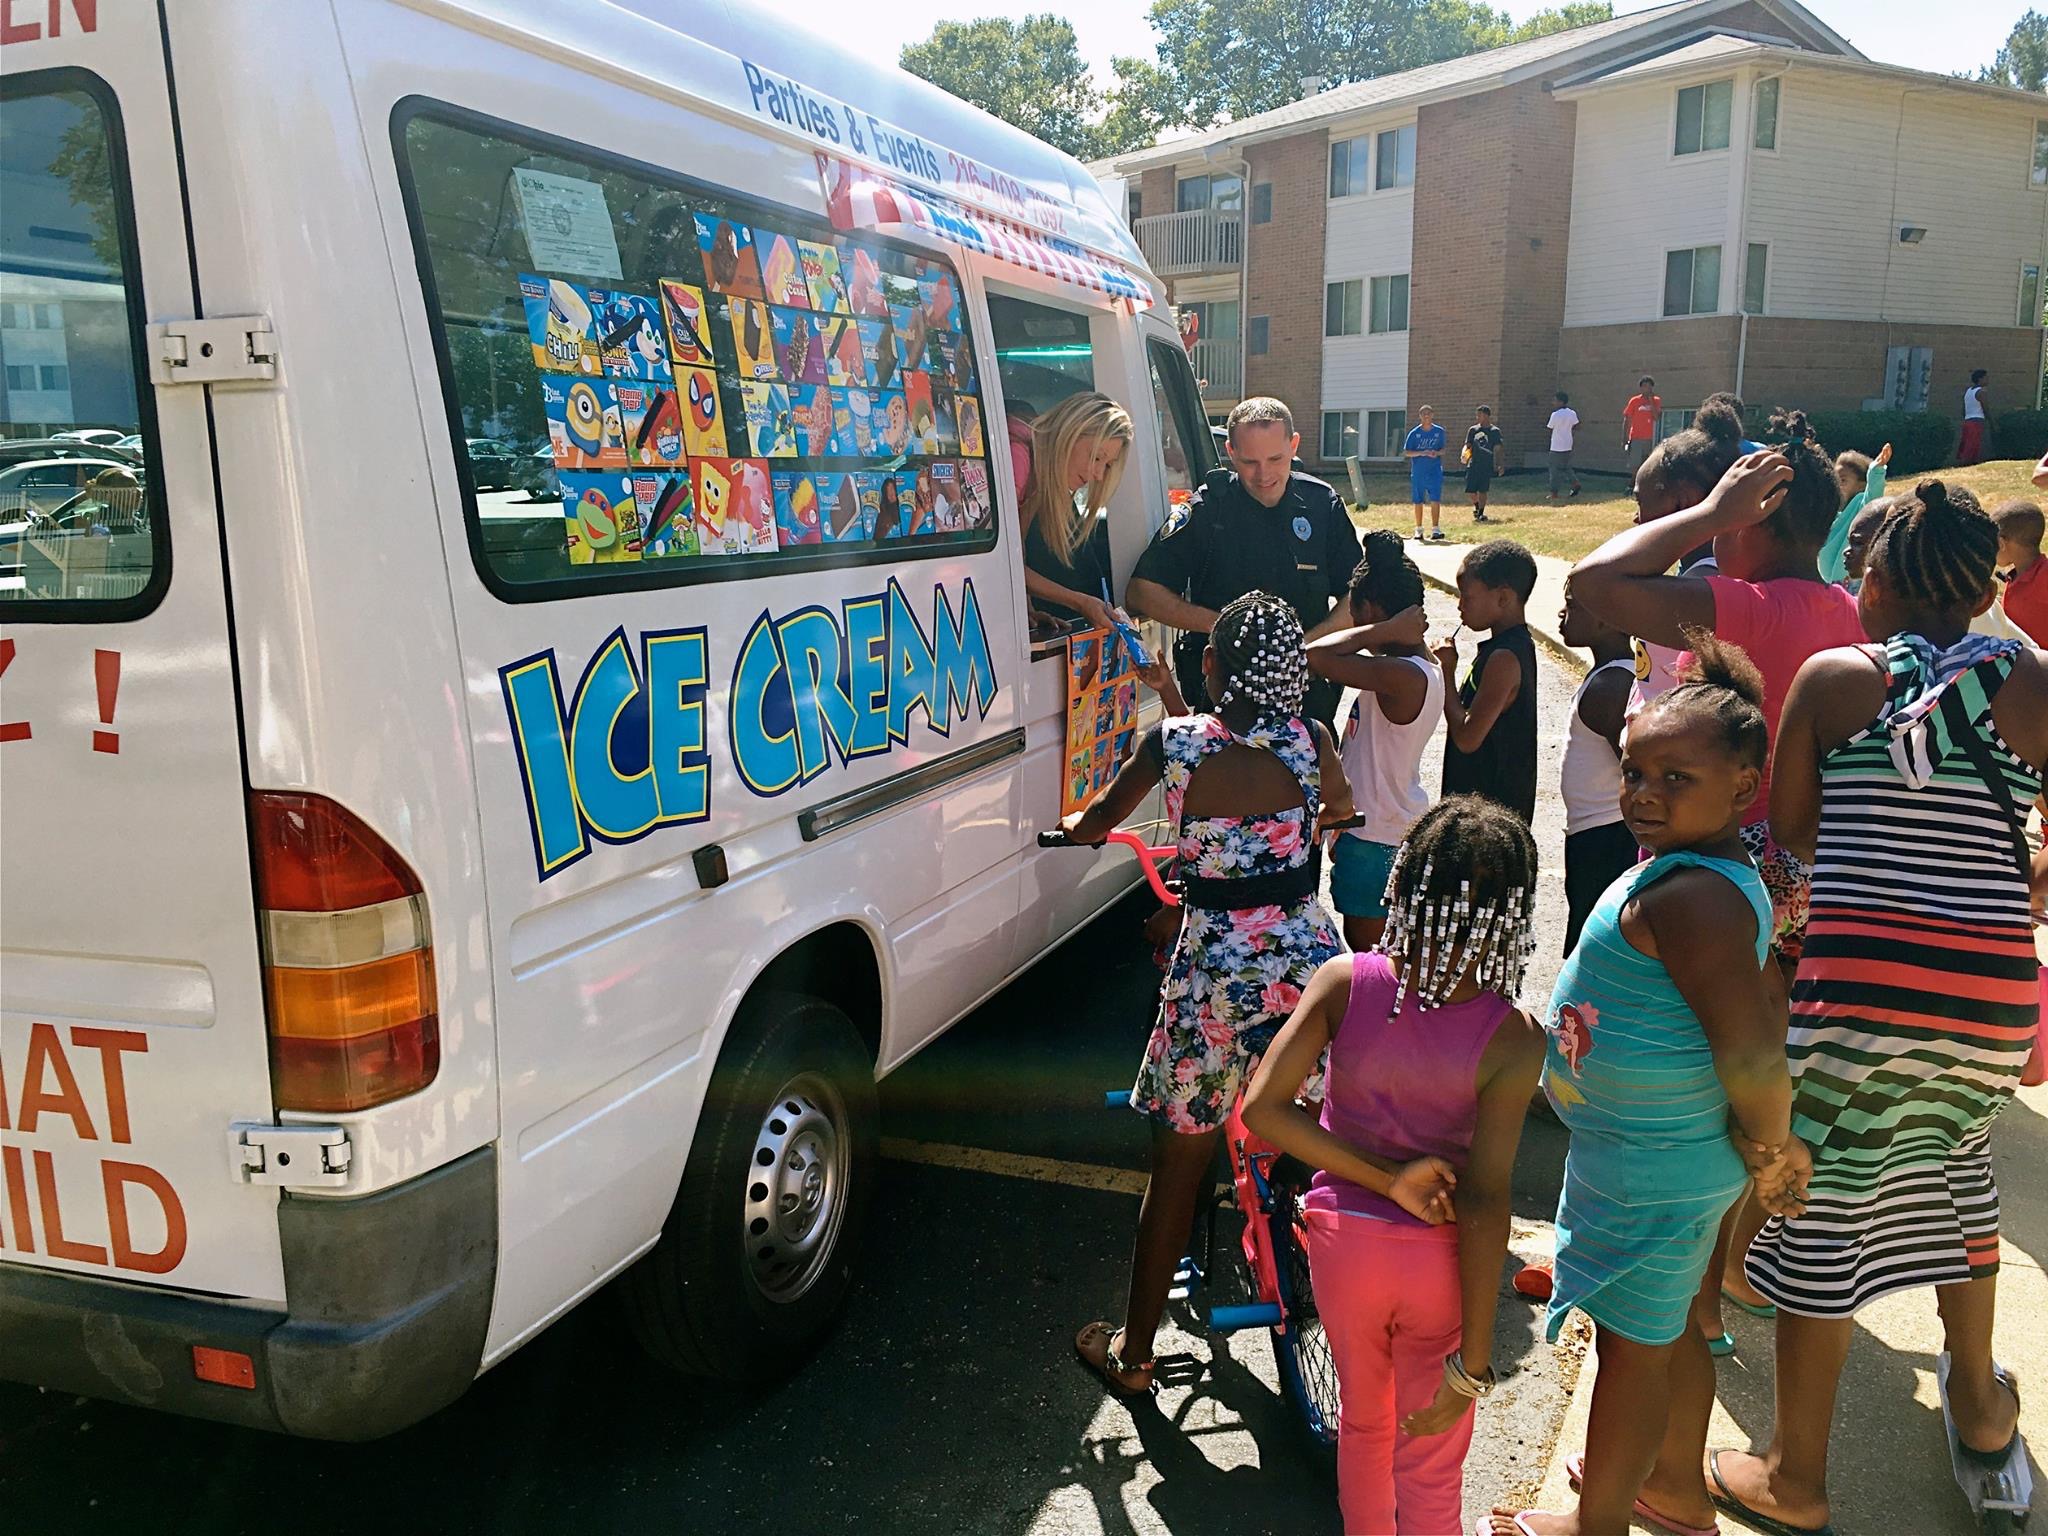 Ice cream truck serving kids